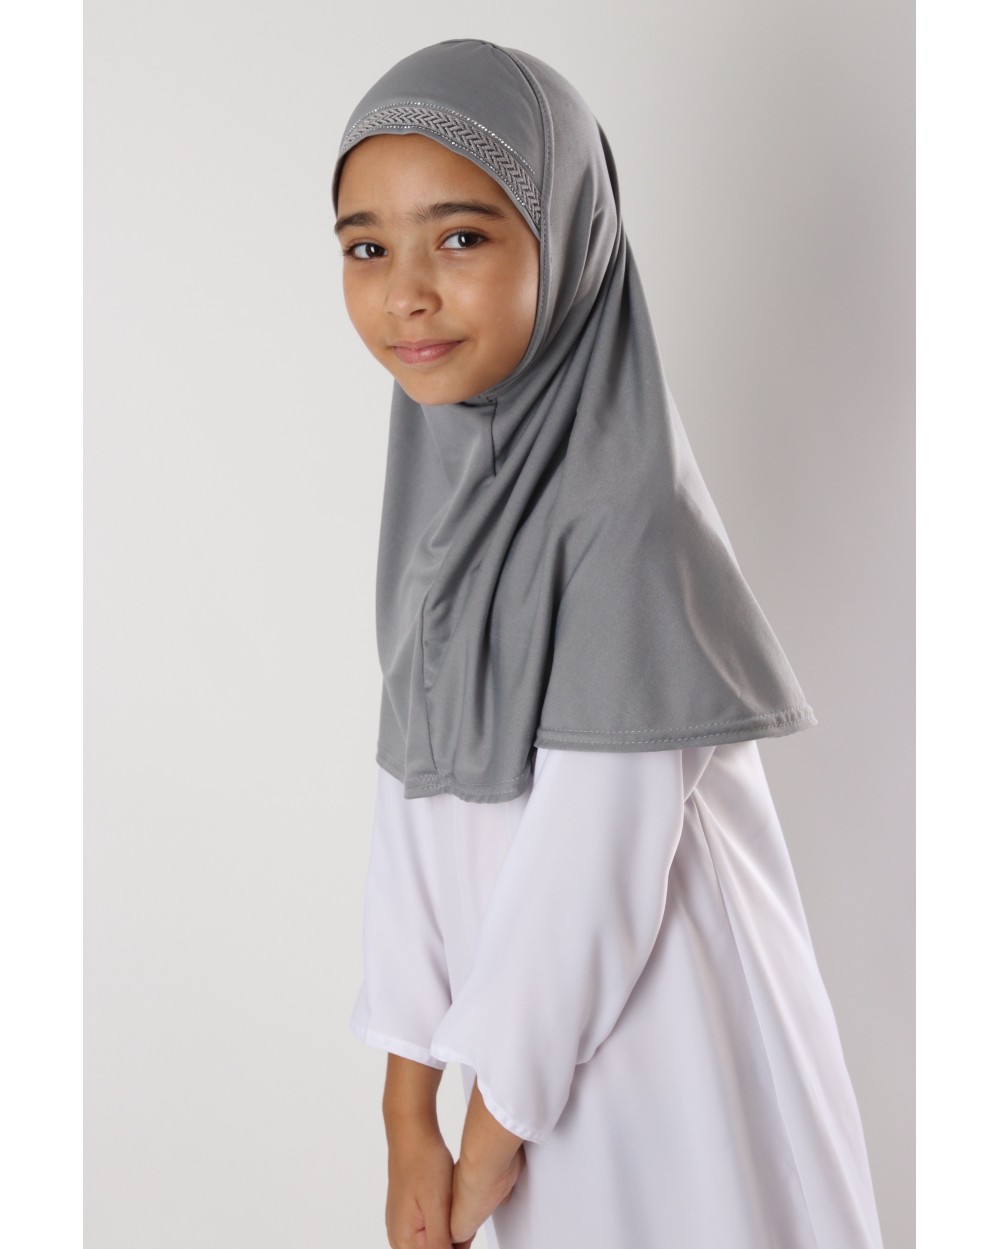 Hijab hirasova for children